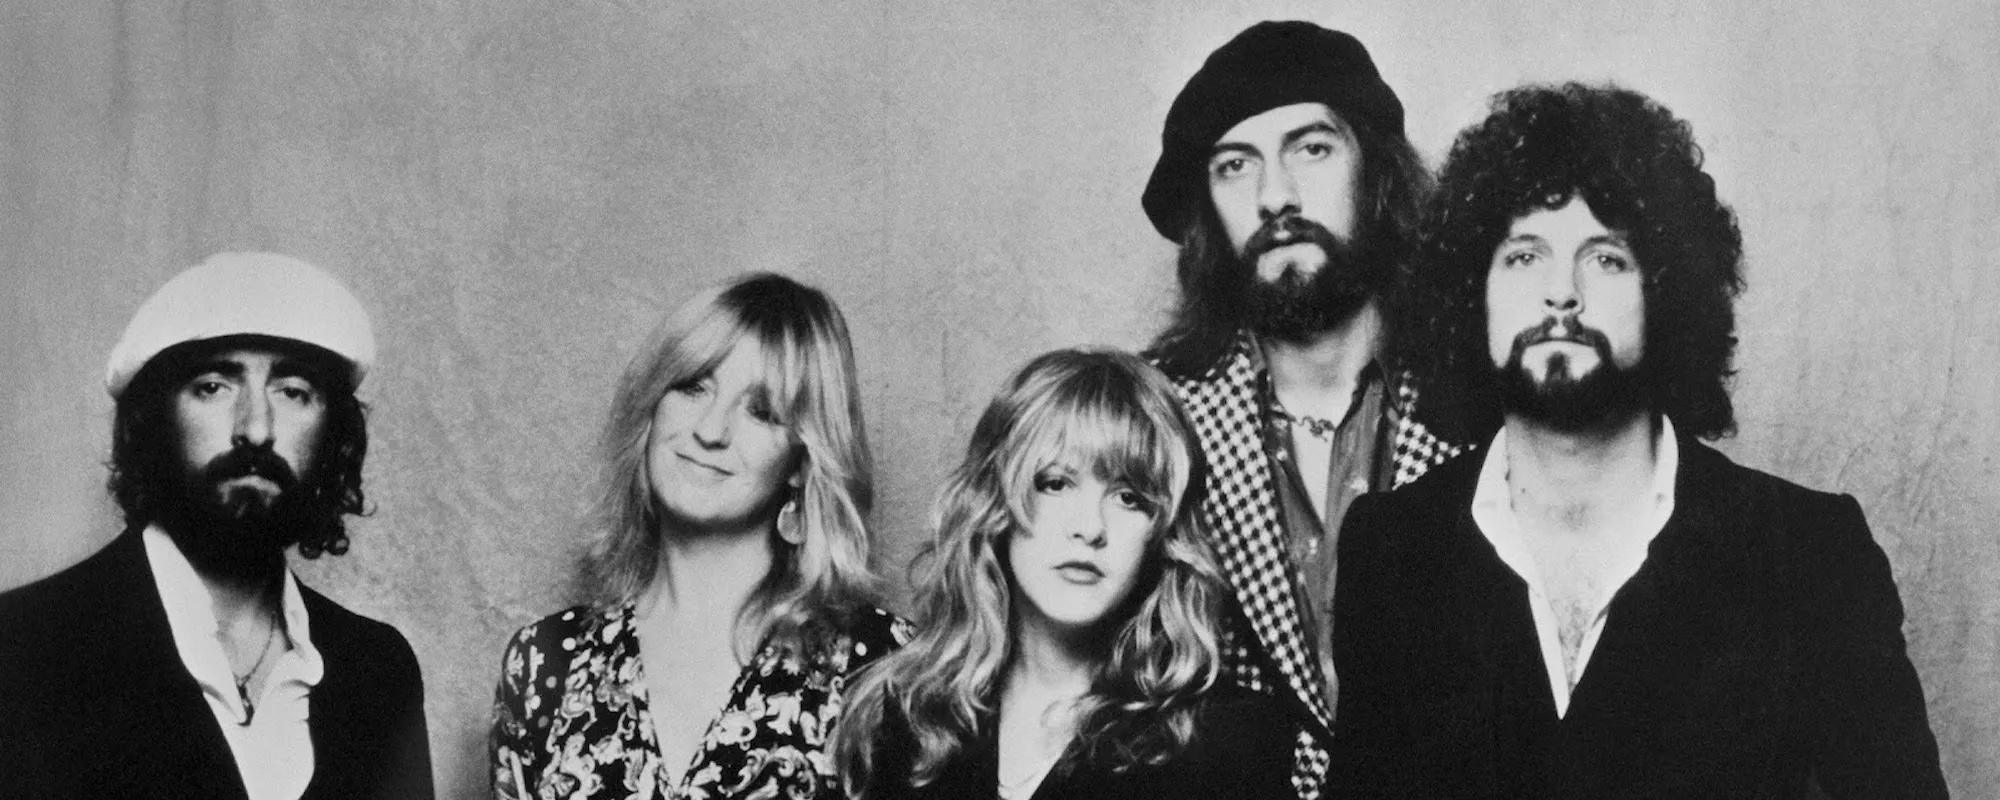 Behind the Song Lyrics: “You Make Loving Fun” by Fleetwood Mac